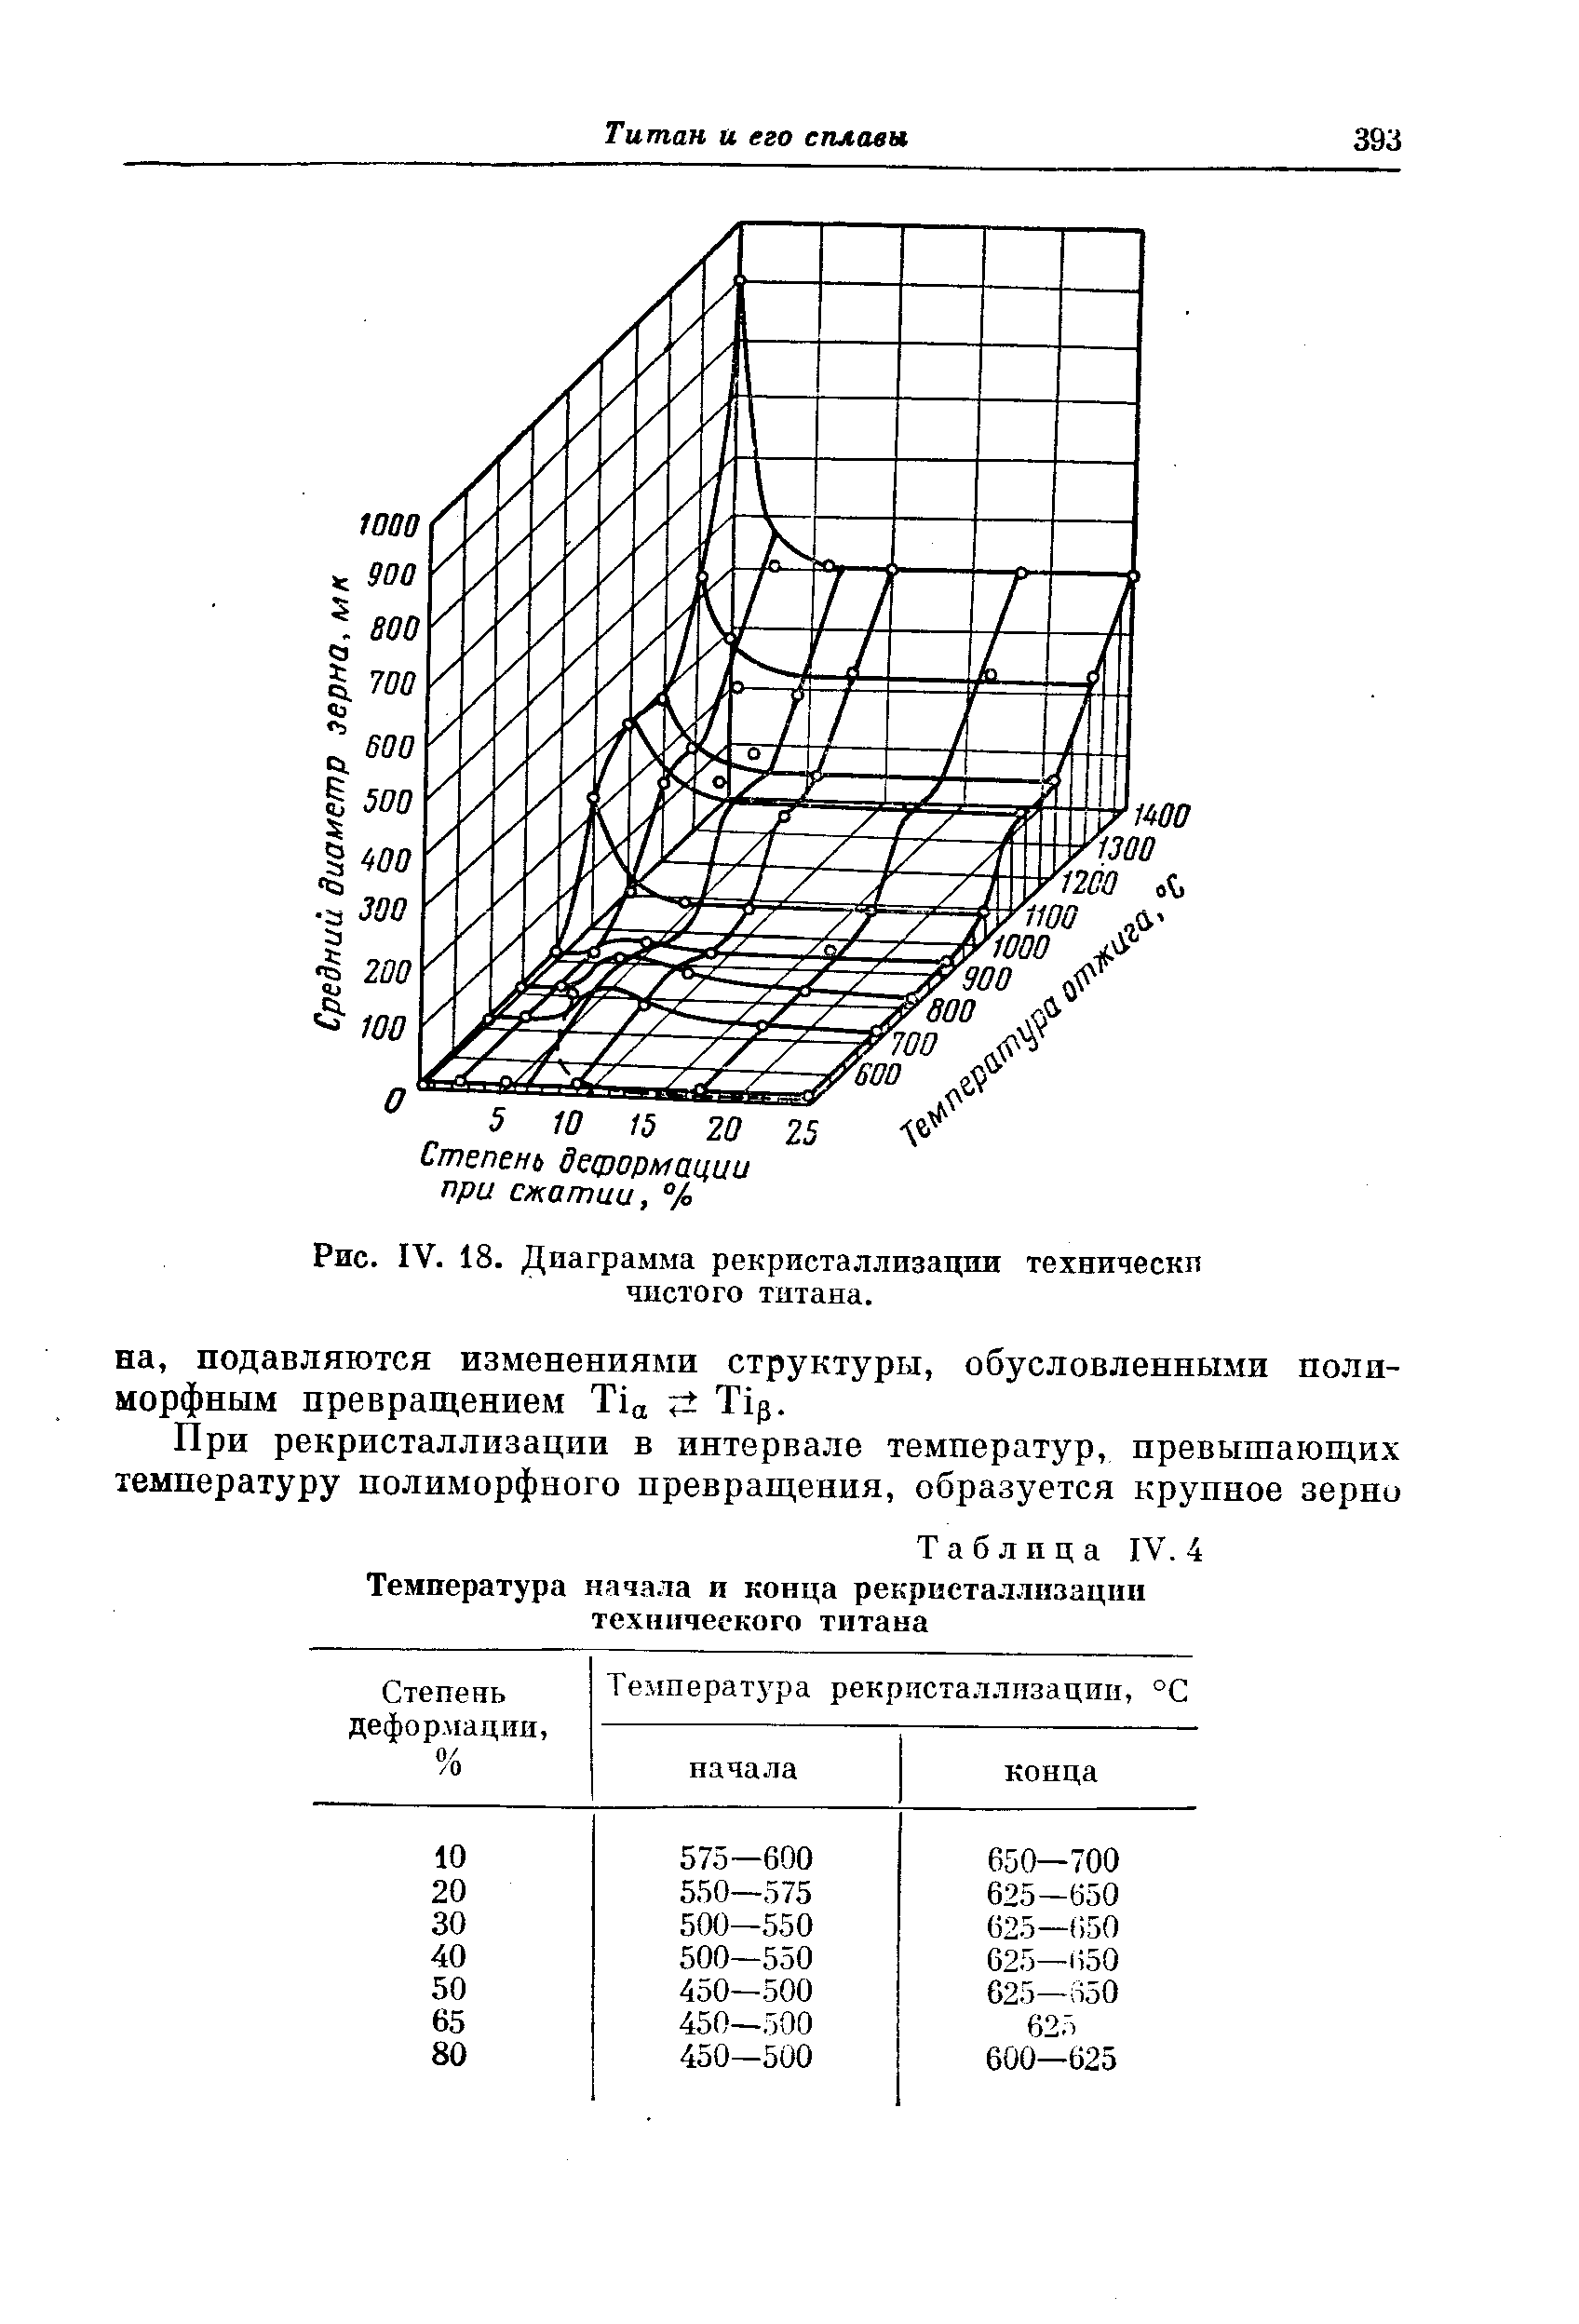 Таблица IV. 4 Температура начала и конца рекристаллизации техипческого титана
